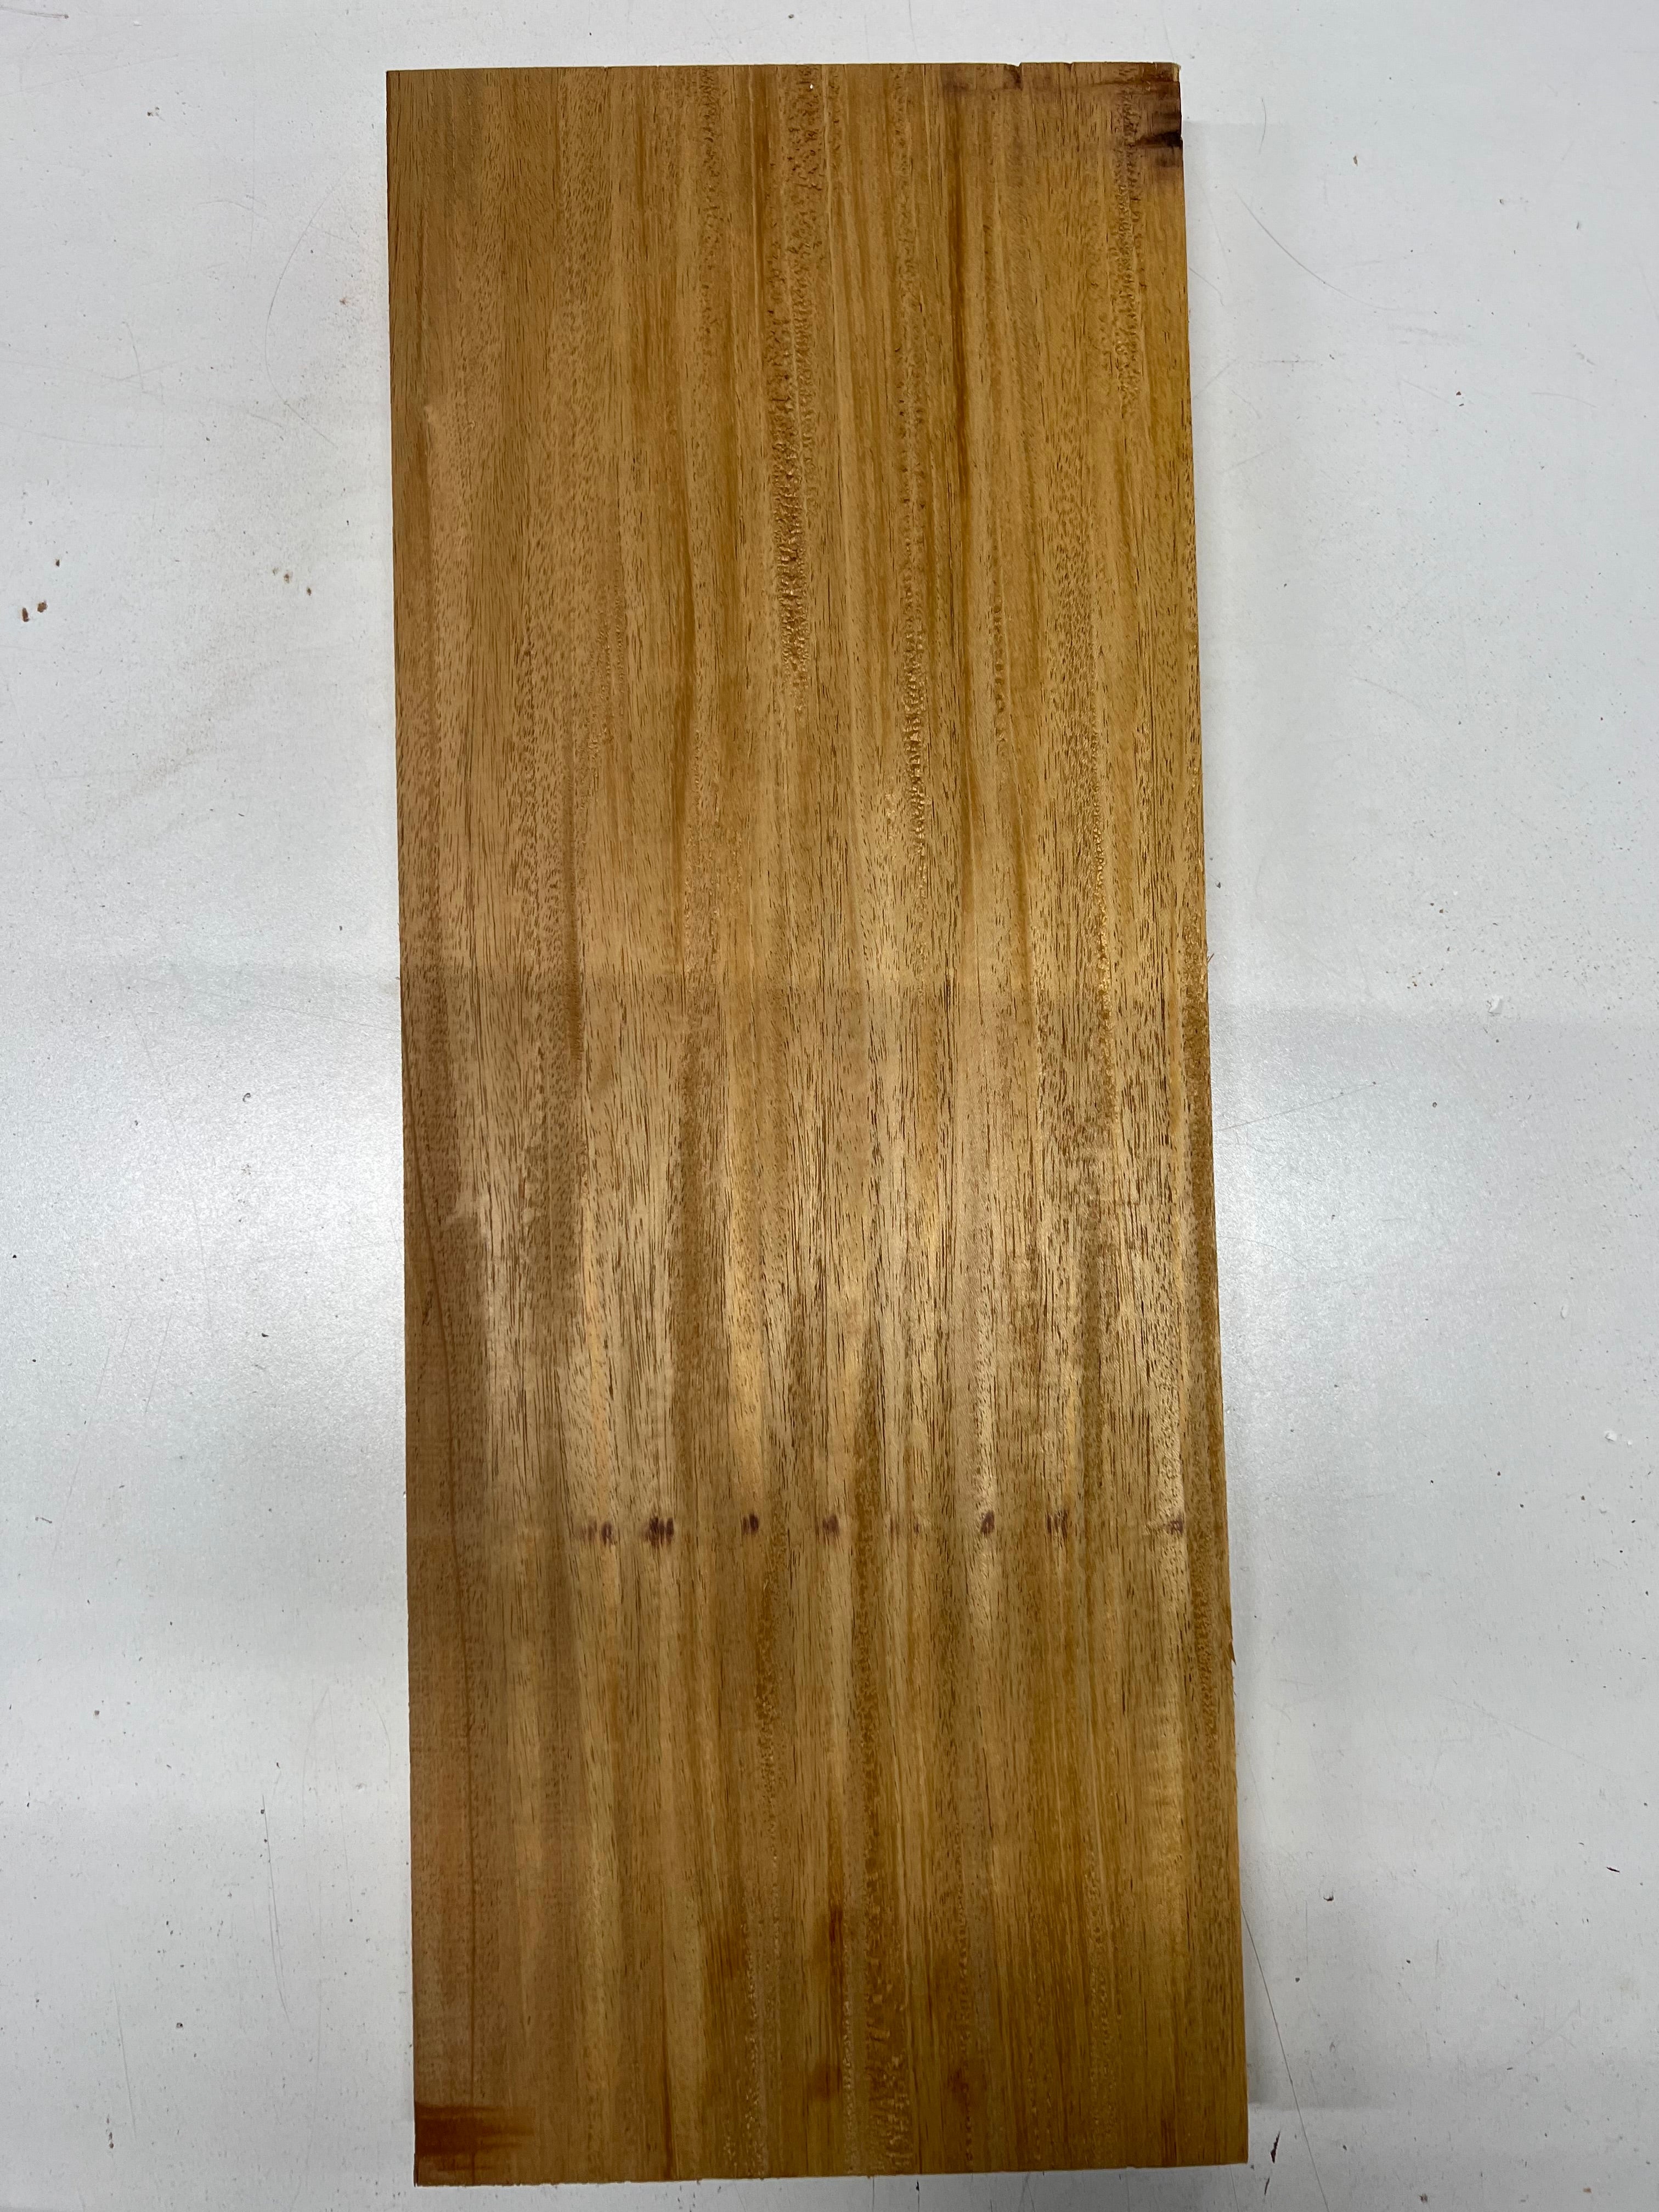 Fijian Mahogany Lumber Board Wood Blank 30&quot;x4-1/2&quot;x2&quot; 